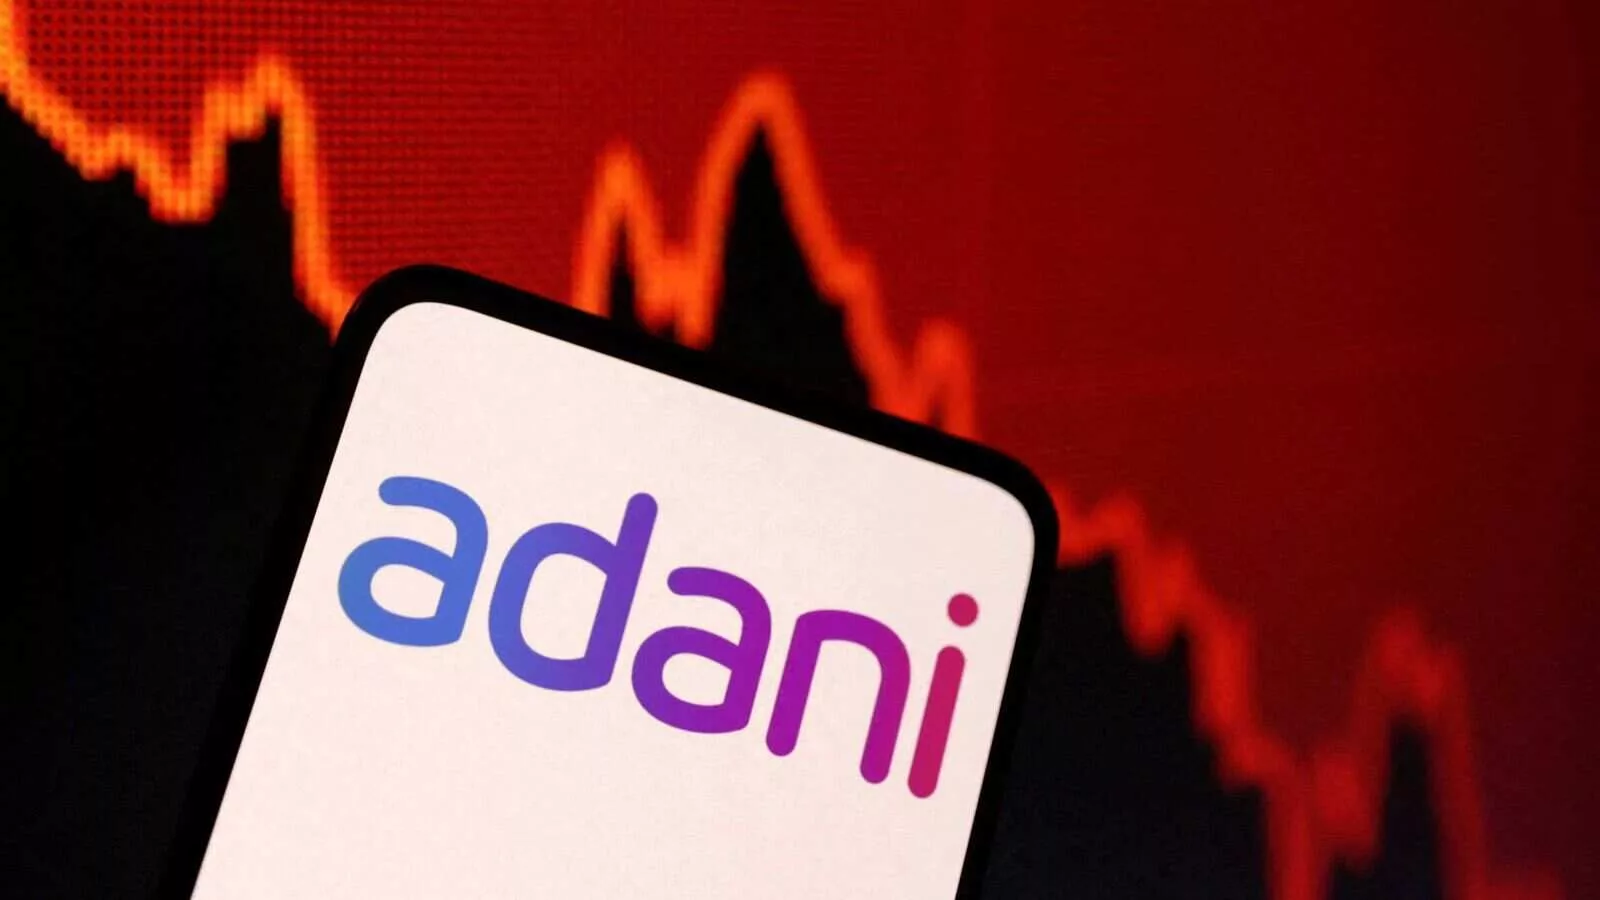 adani group stock